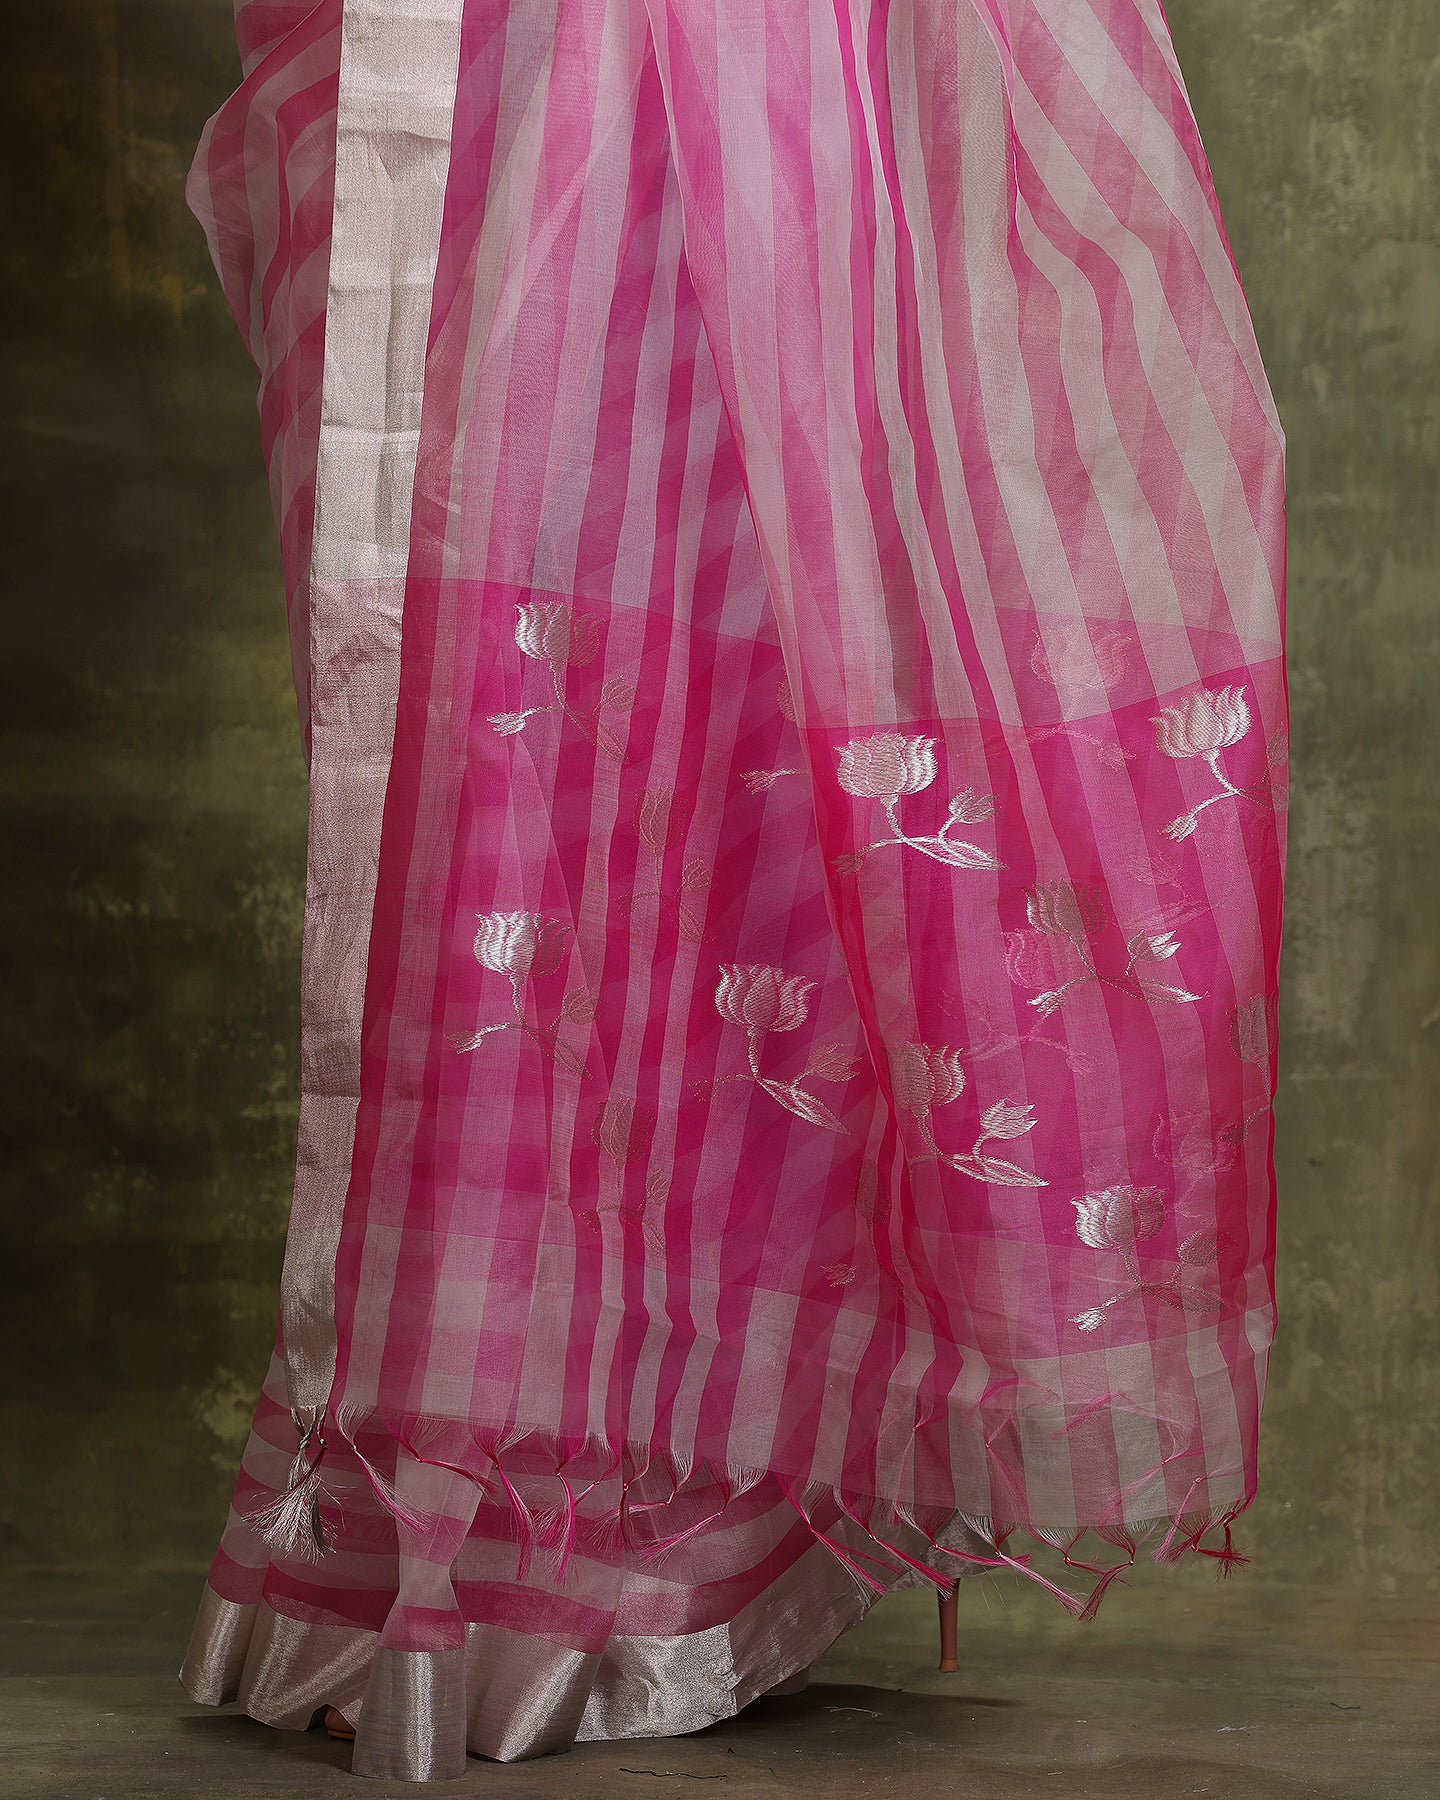 Pink  Organza Handloom Silk Saree